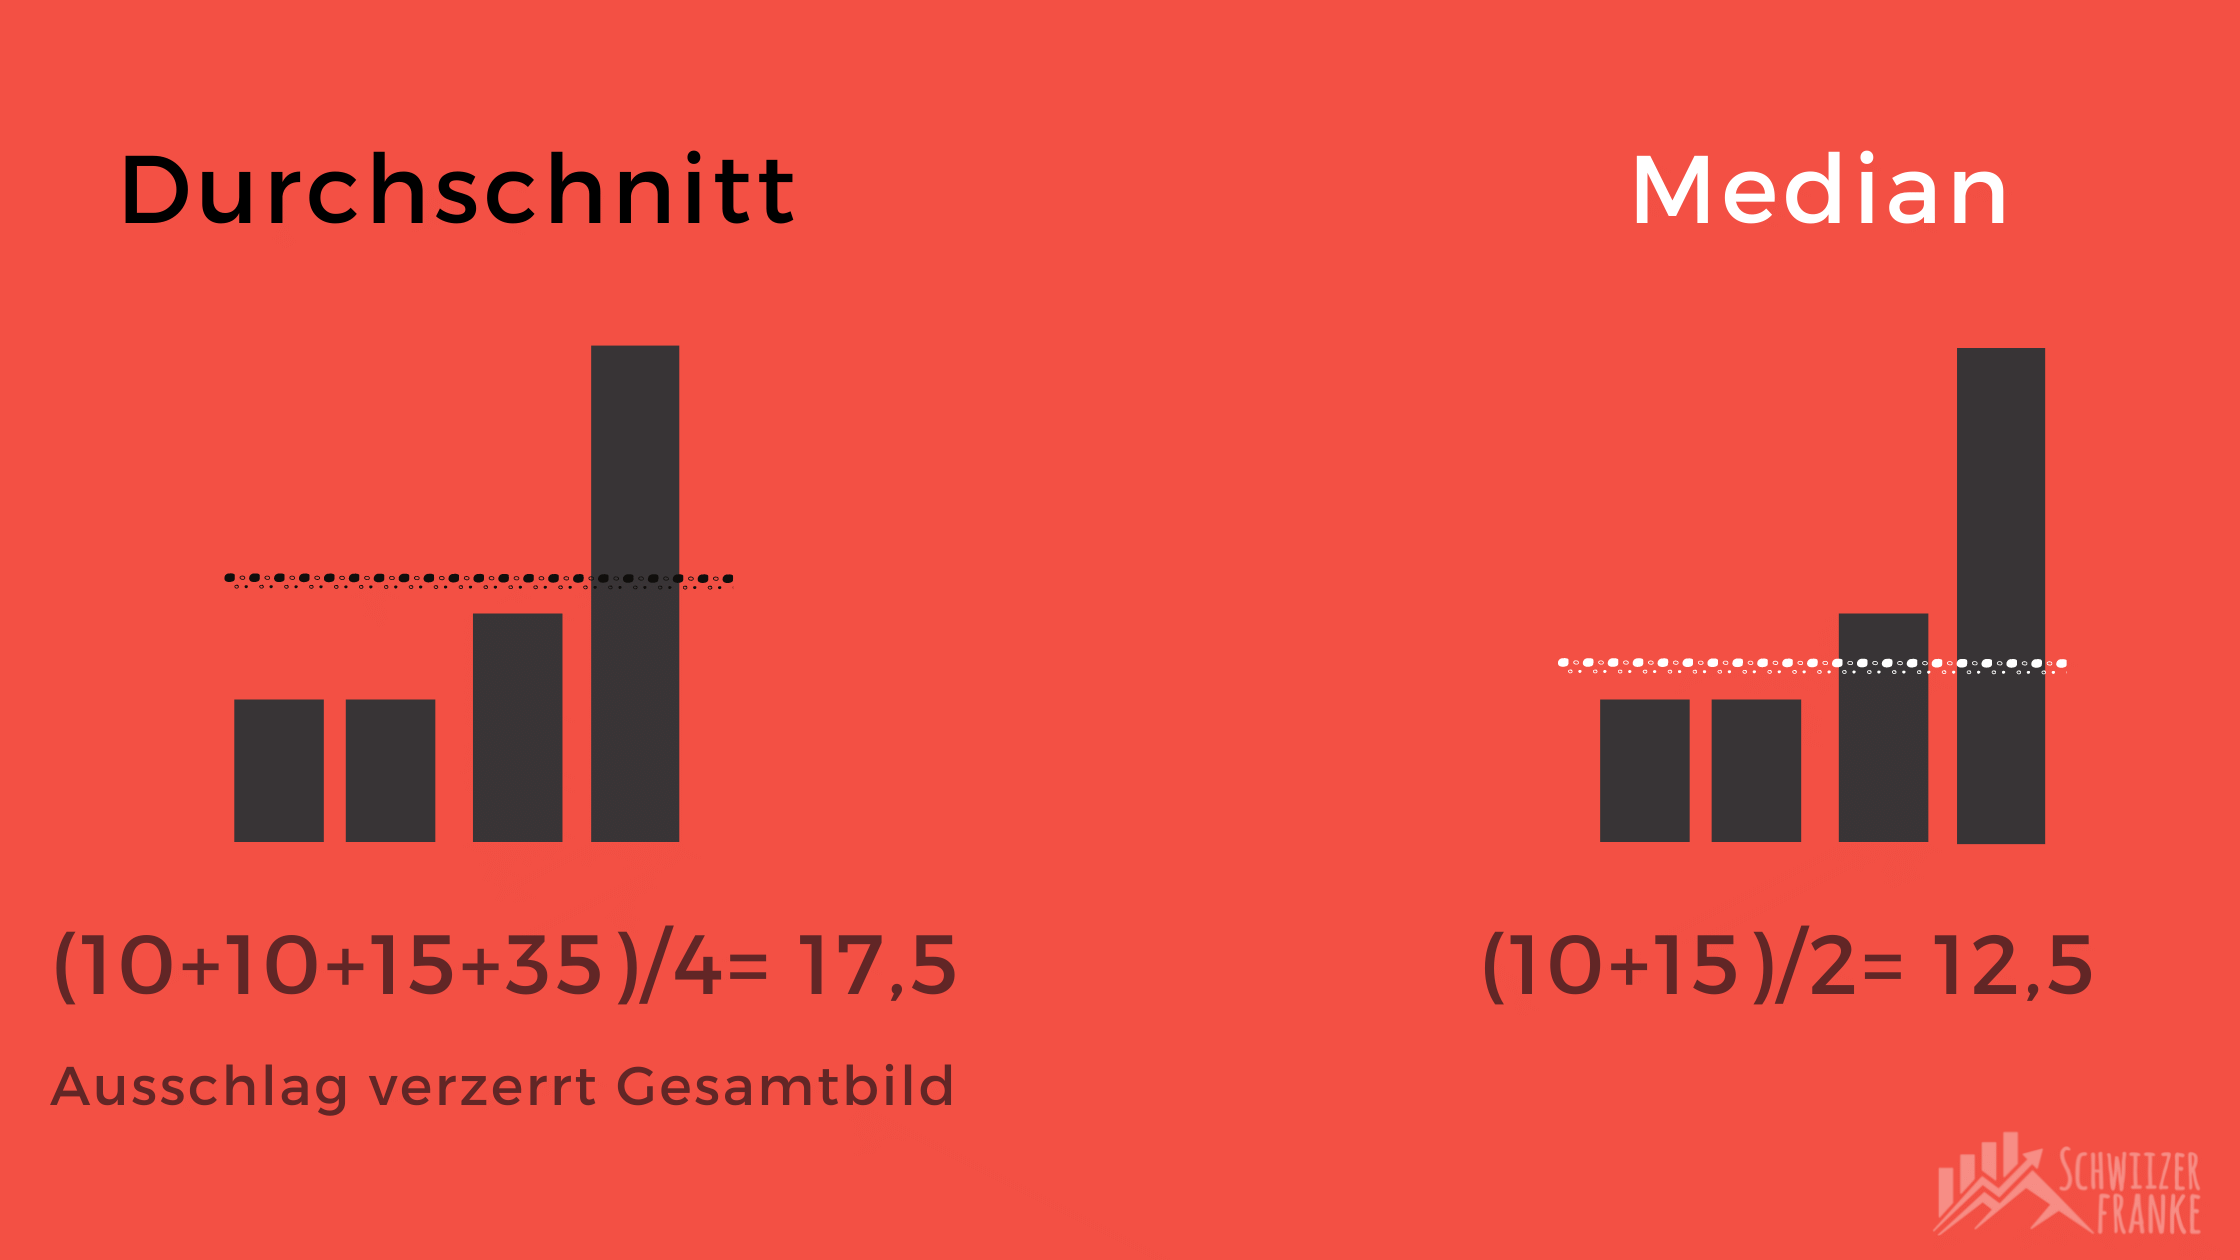 Median wealth Switzerland Average wealth income switzerland germany comparison